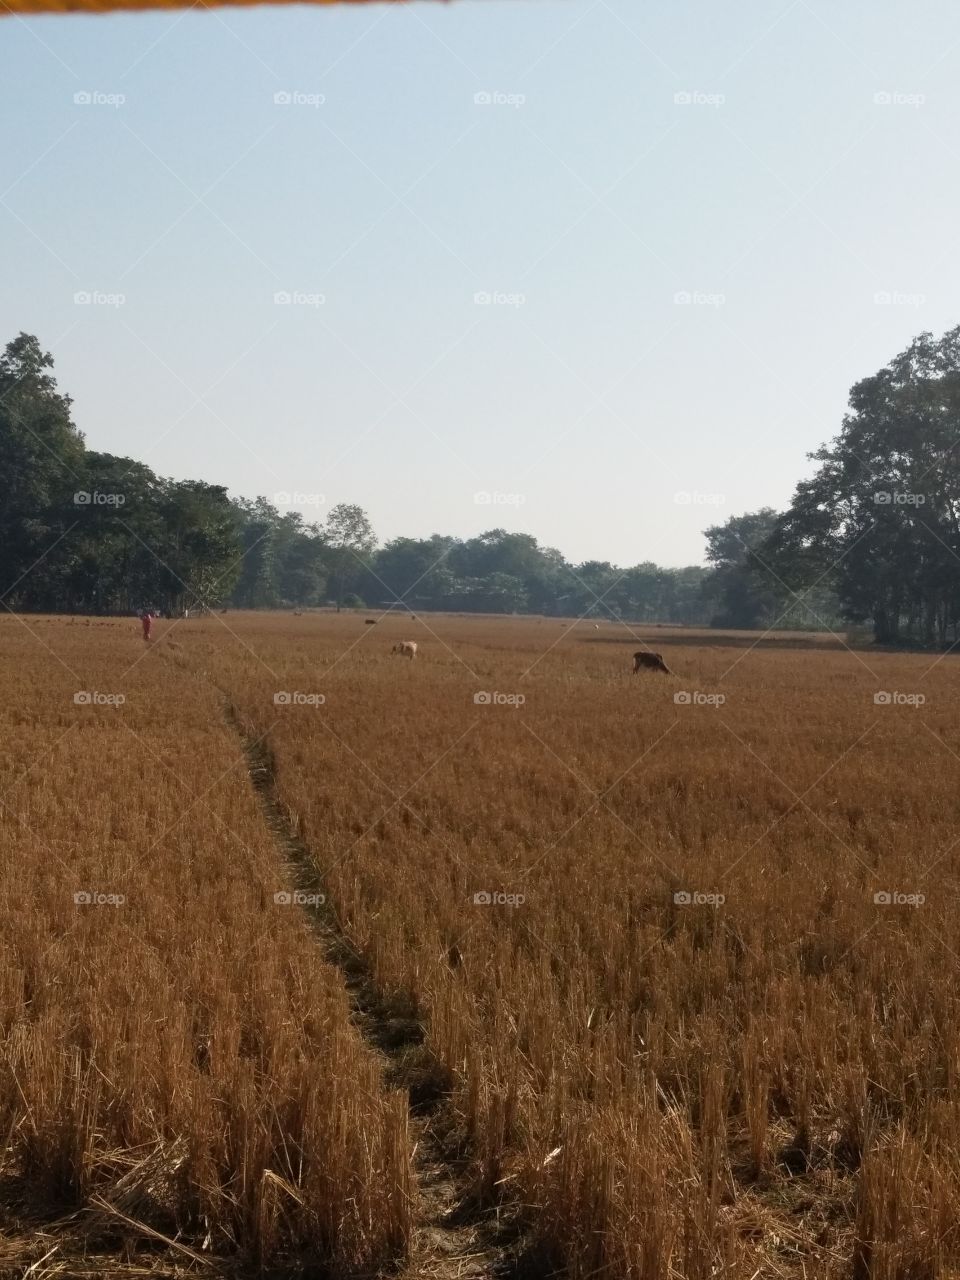 Golden paddy field